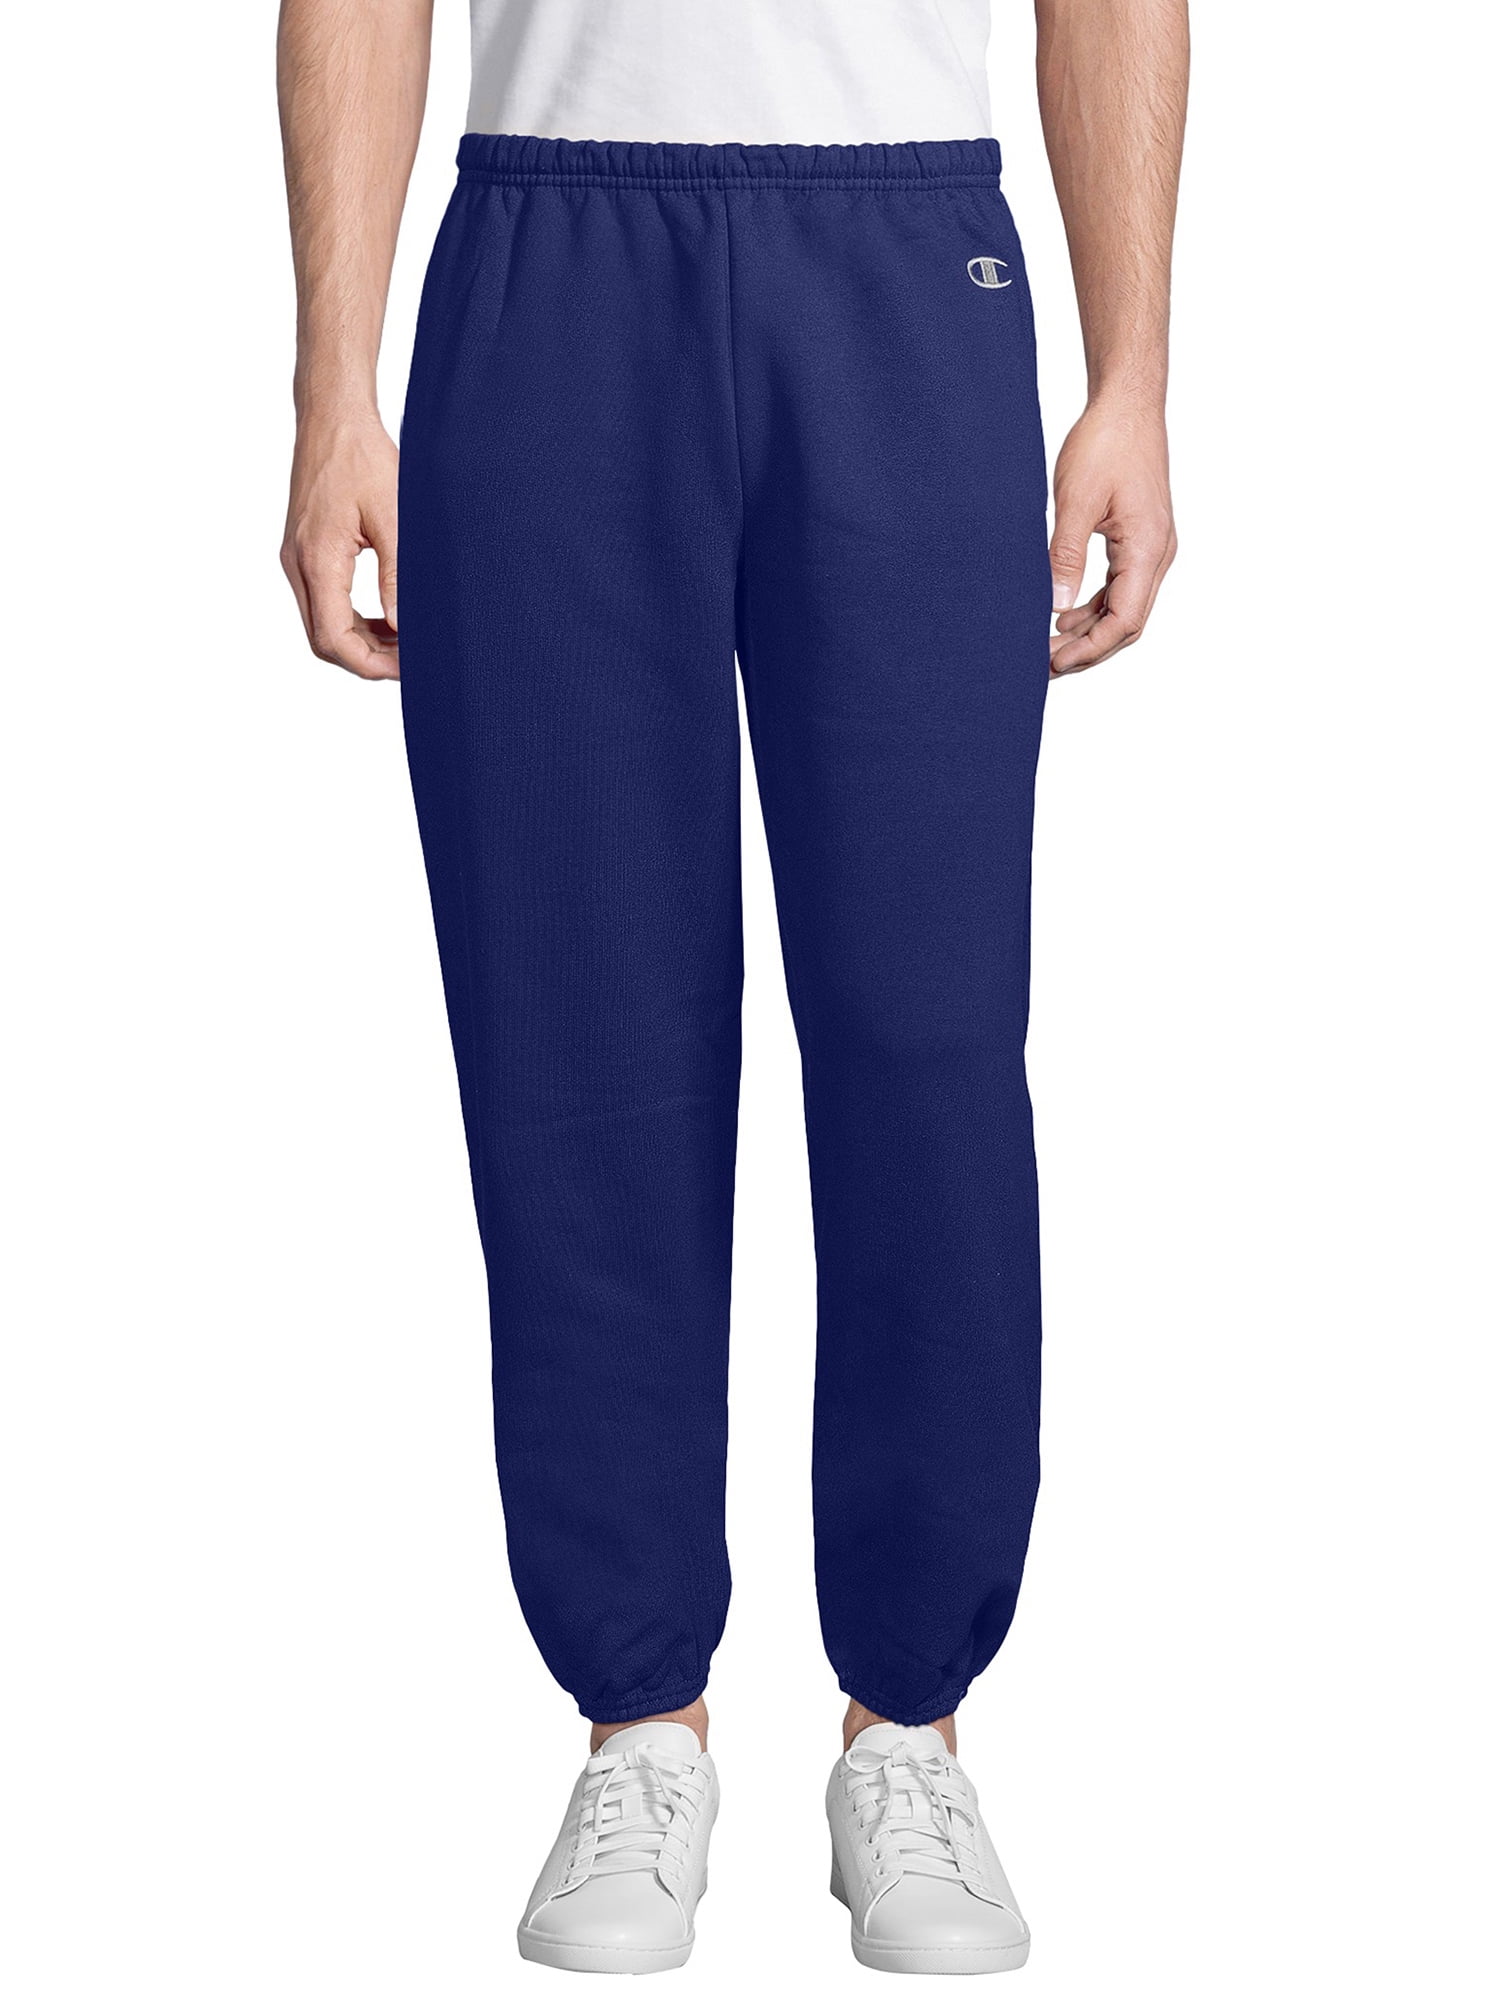 Champion Men's Cotton Max Fleece Sweatpants with Pockets - Walmart.com